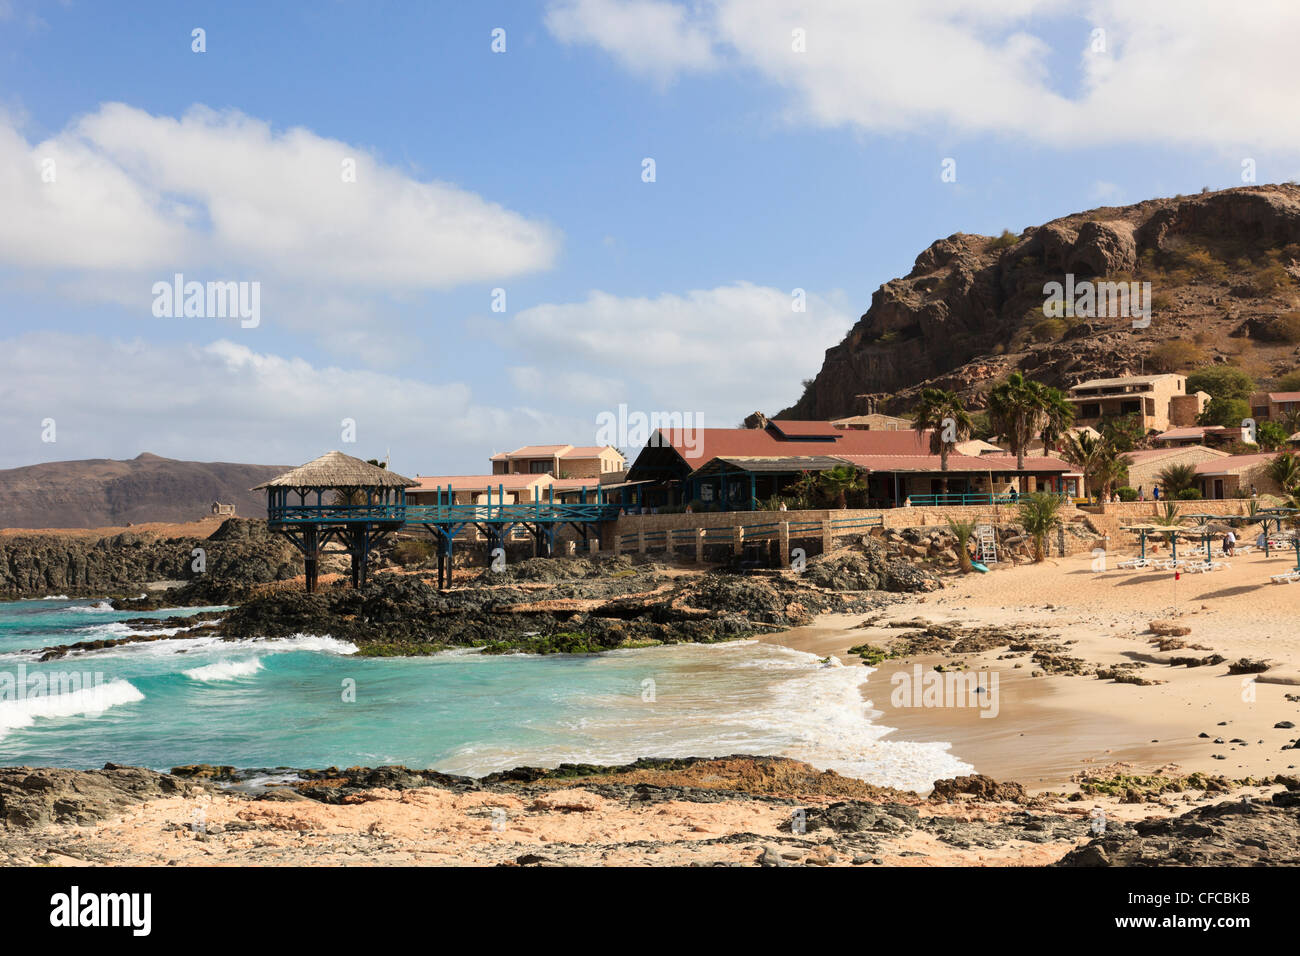 Praia Cabral, Sal Rei, Insel Boa Vista, Kap Verde Inseln. Die Marine Club Strandresort auf felsigen Küste Stockfoto